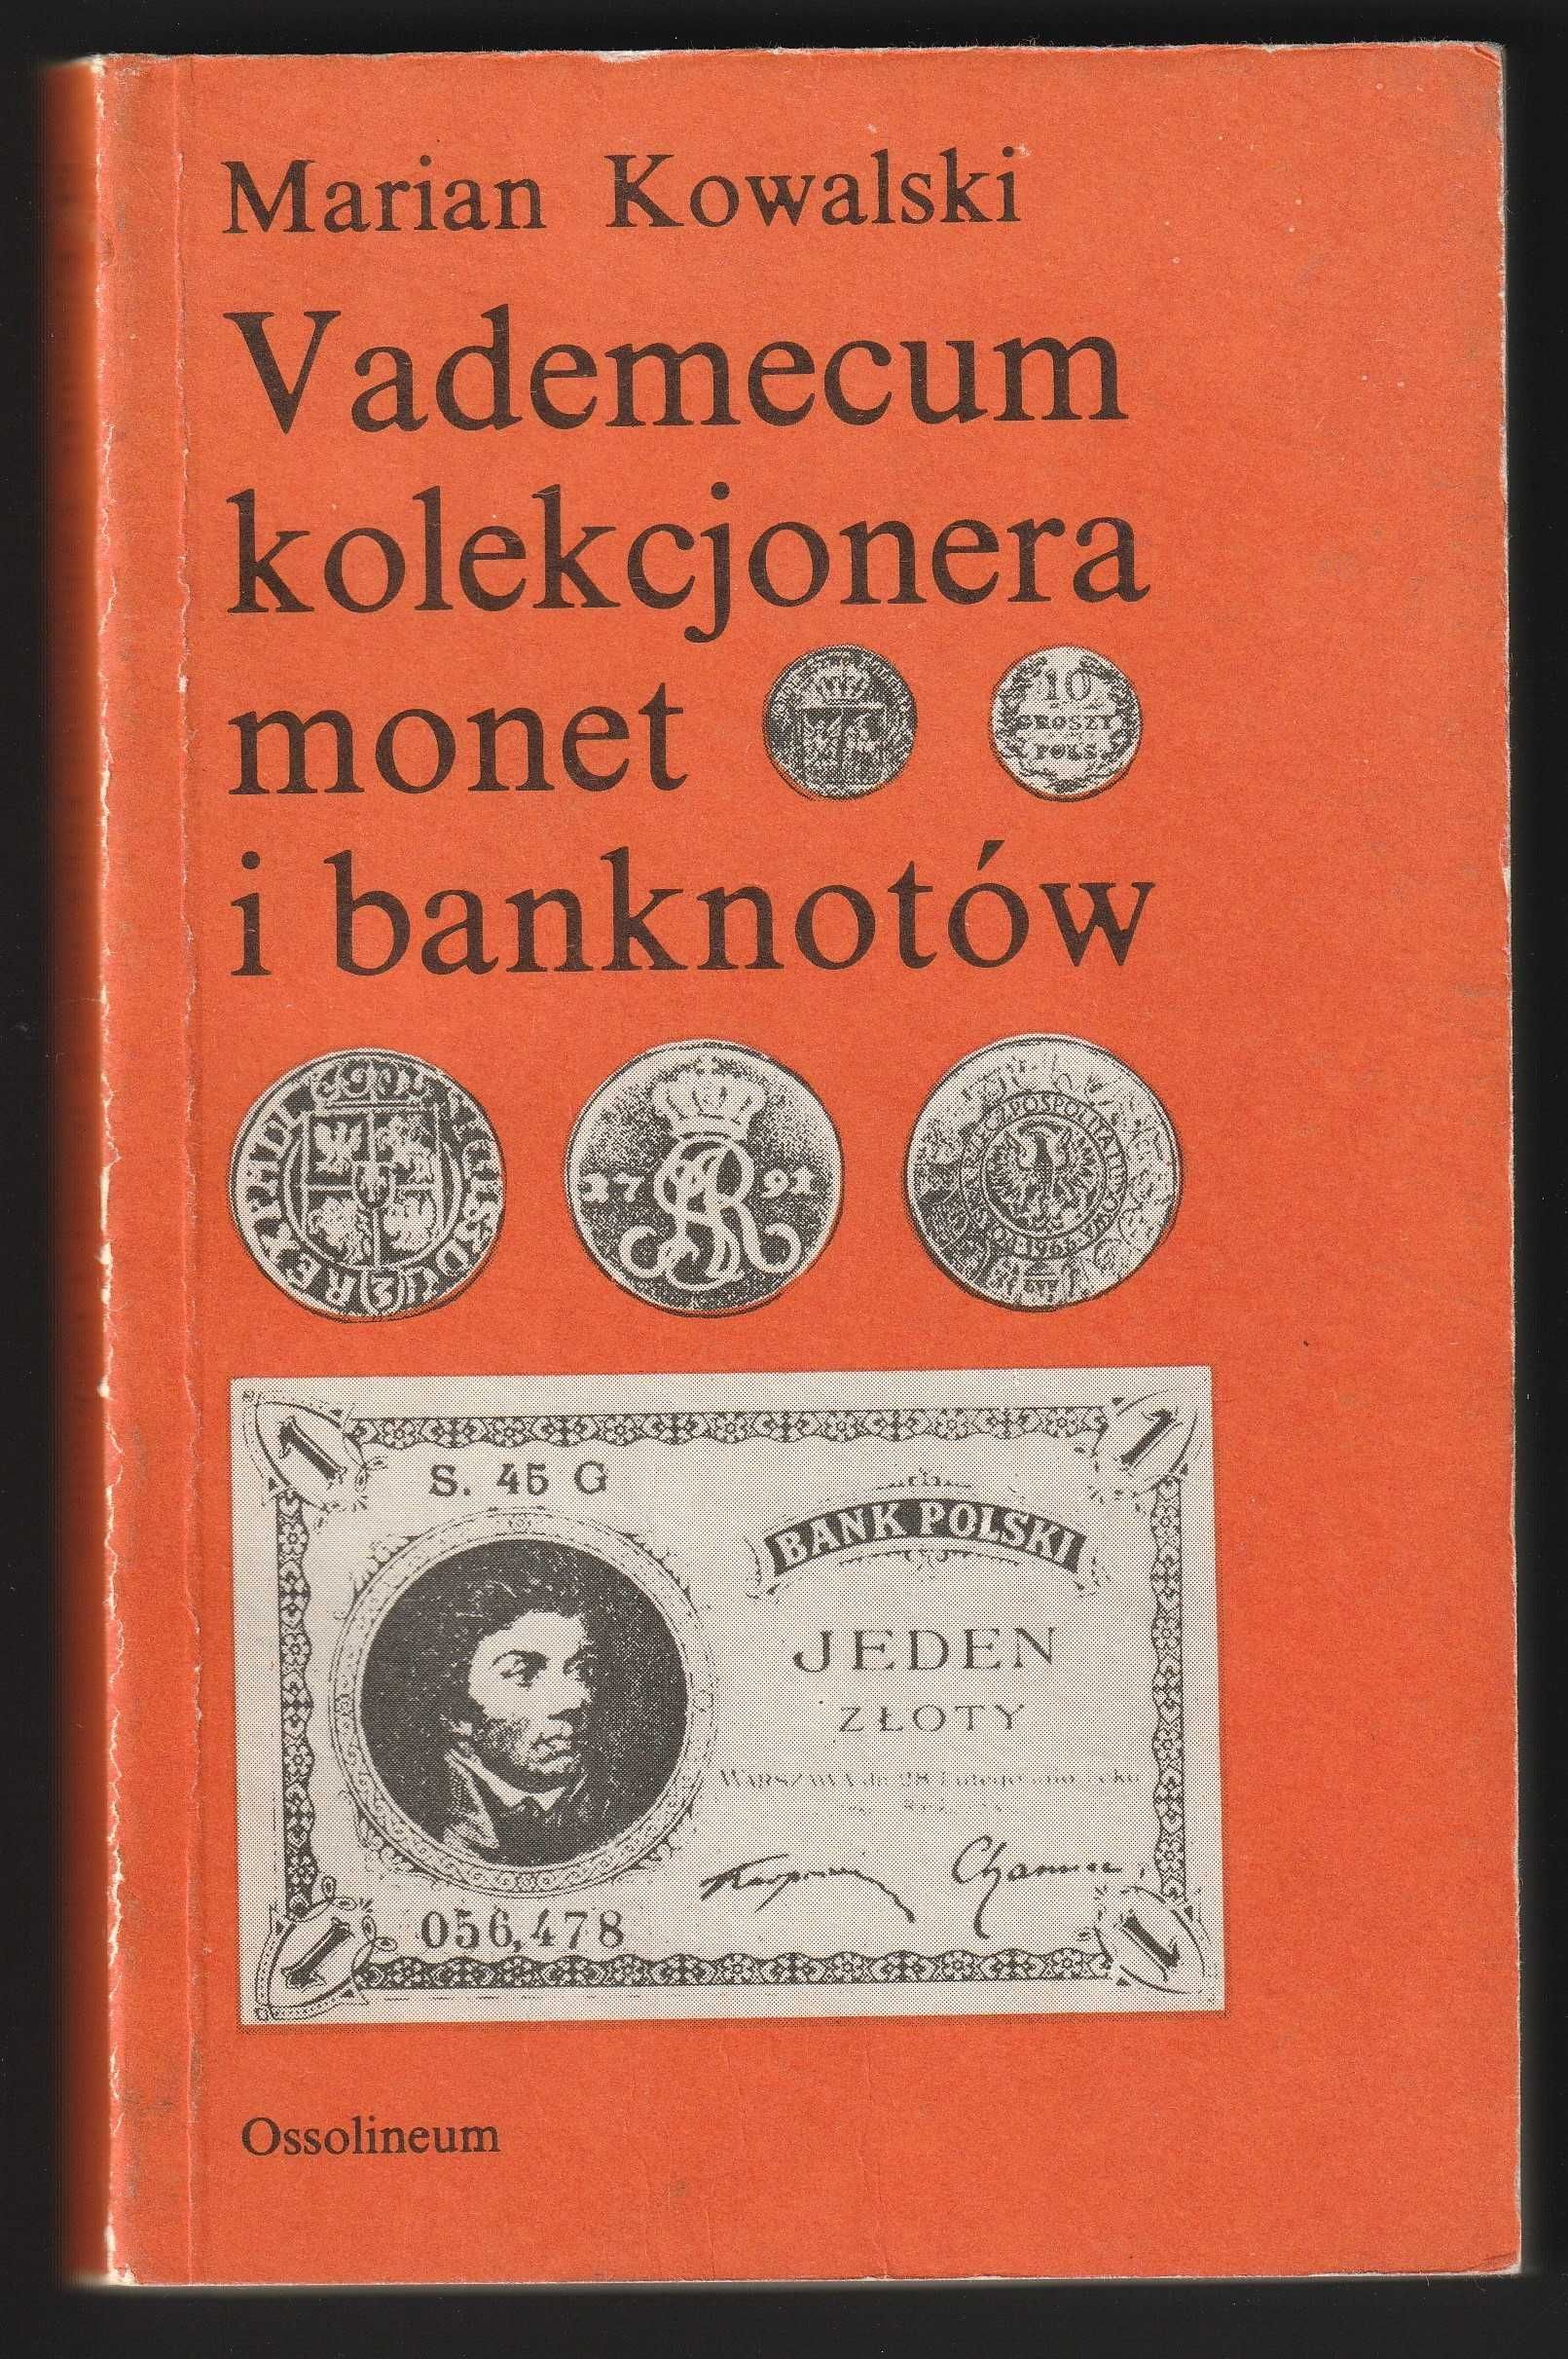 Vademecum kolekcjonera monet i banknotów - Marian Kowalski - 1988